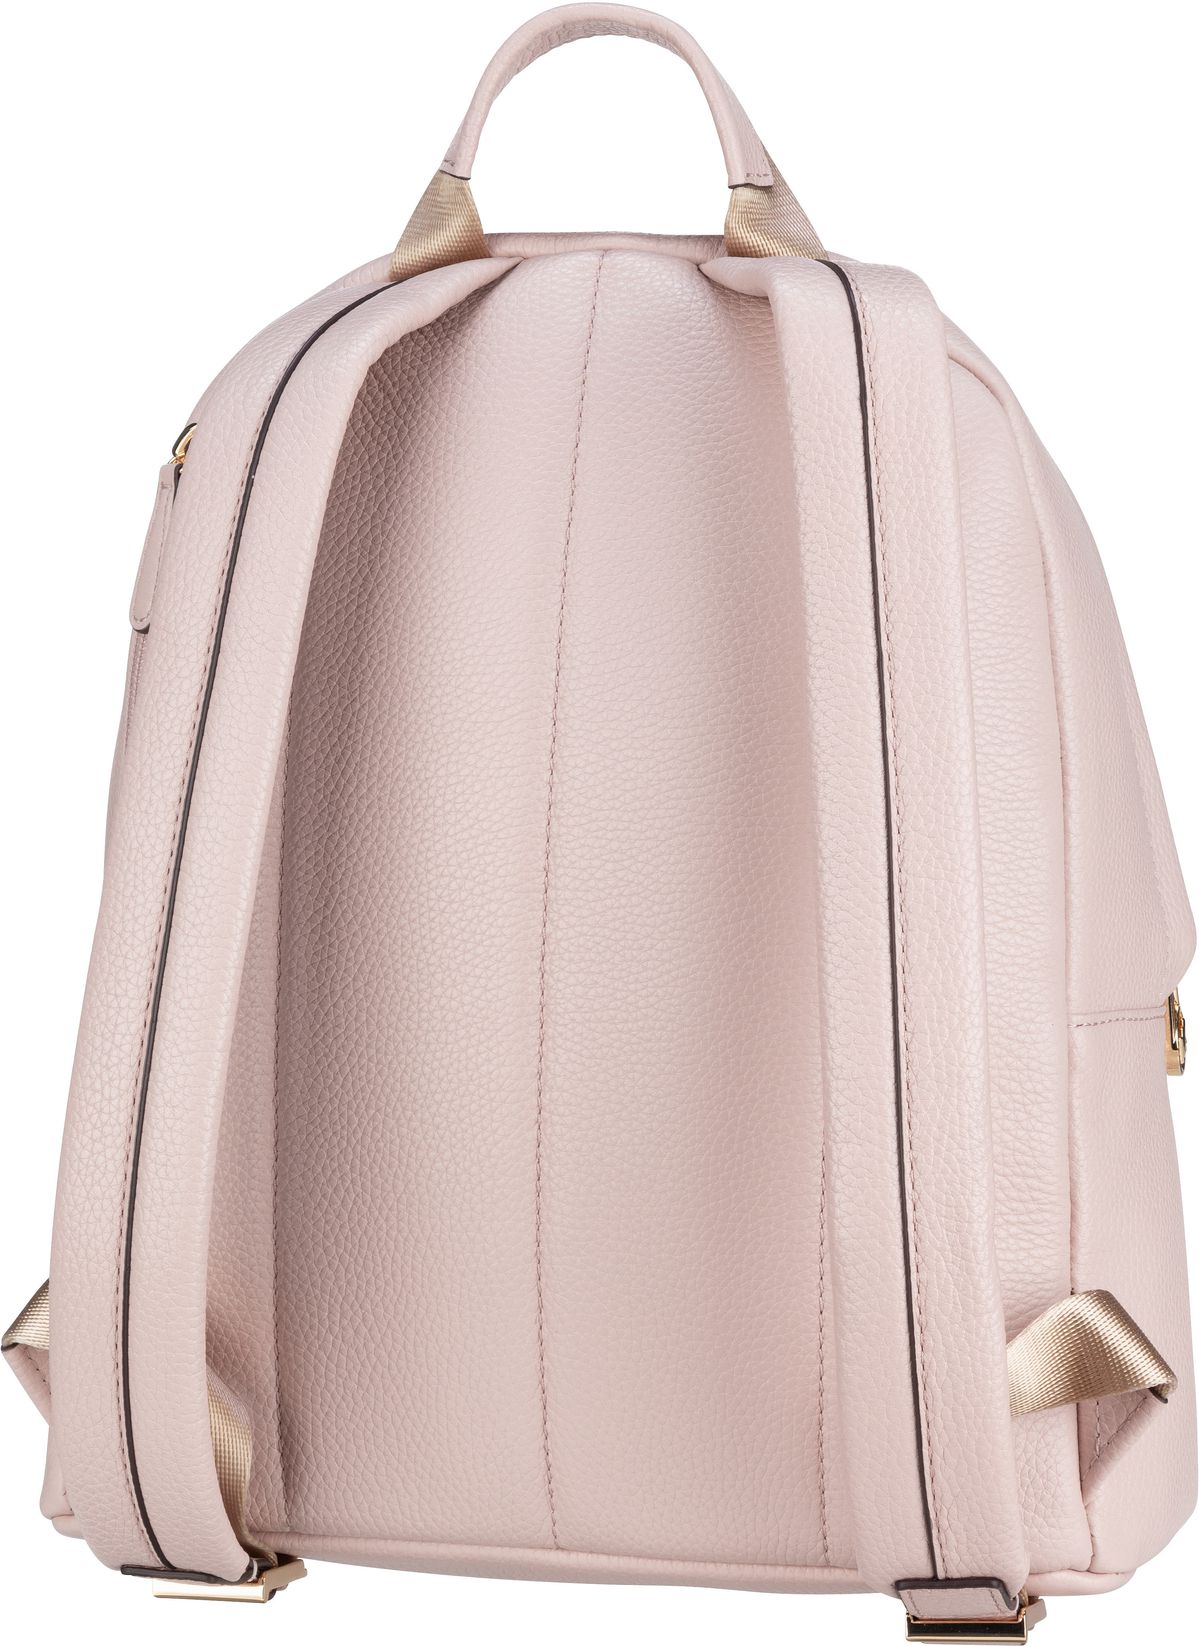 Michael Kors Slater Medium Backpack - Soft Pink